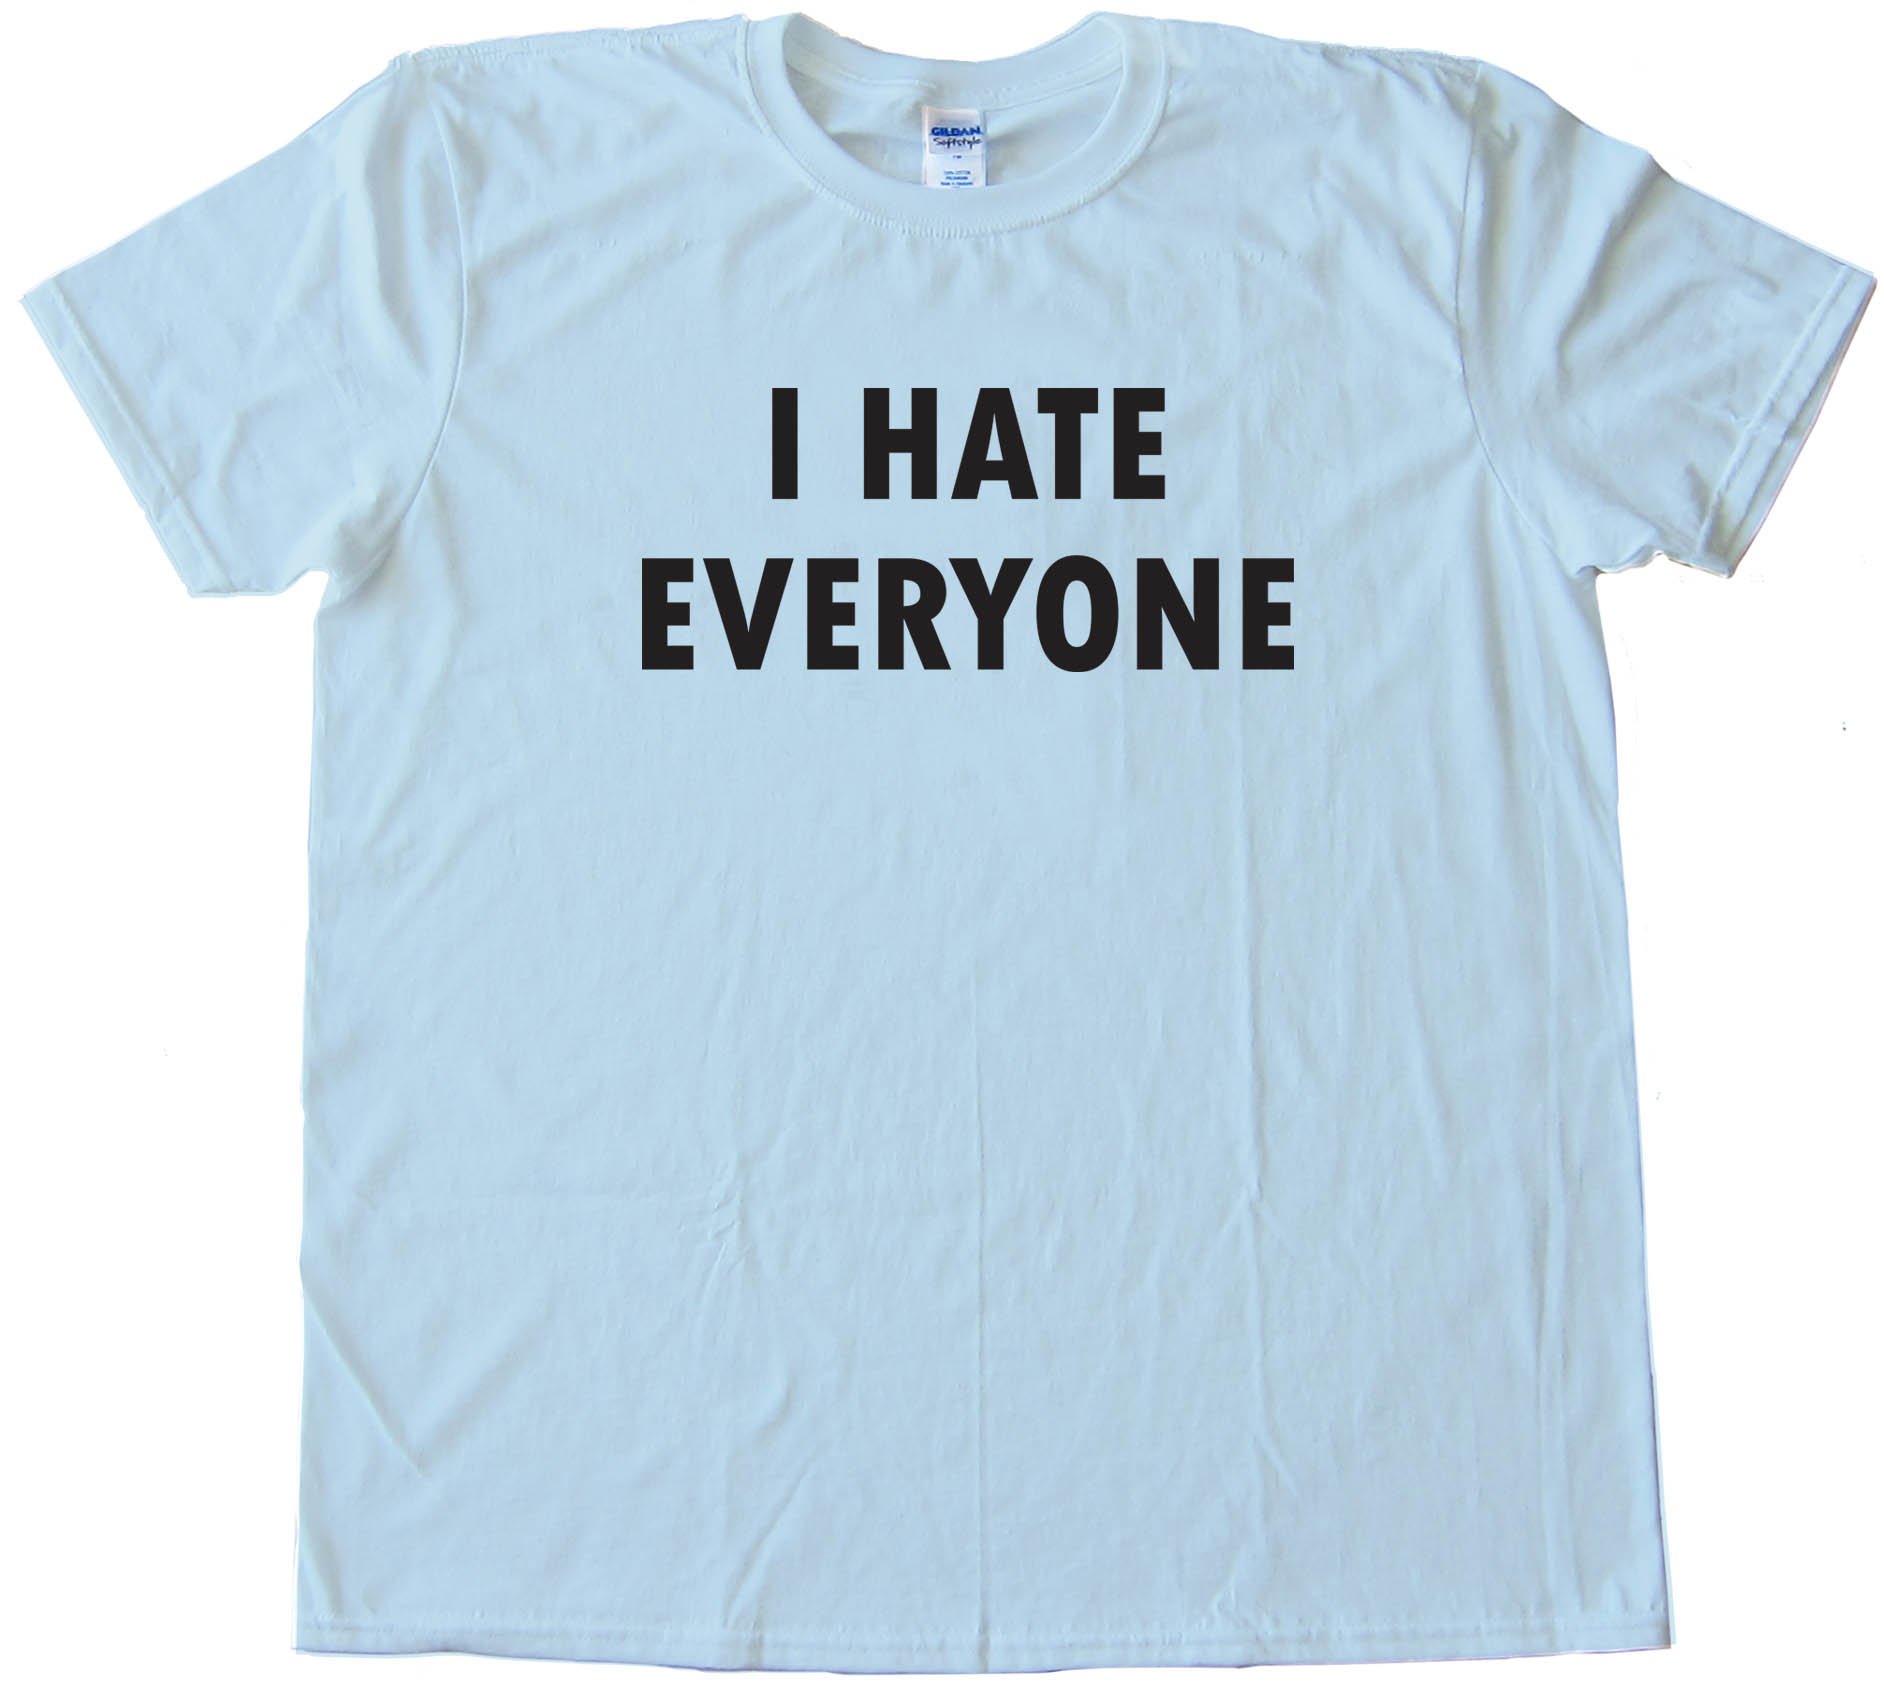 I Have Everyone - Tee Shirt